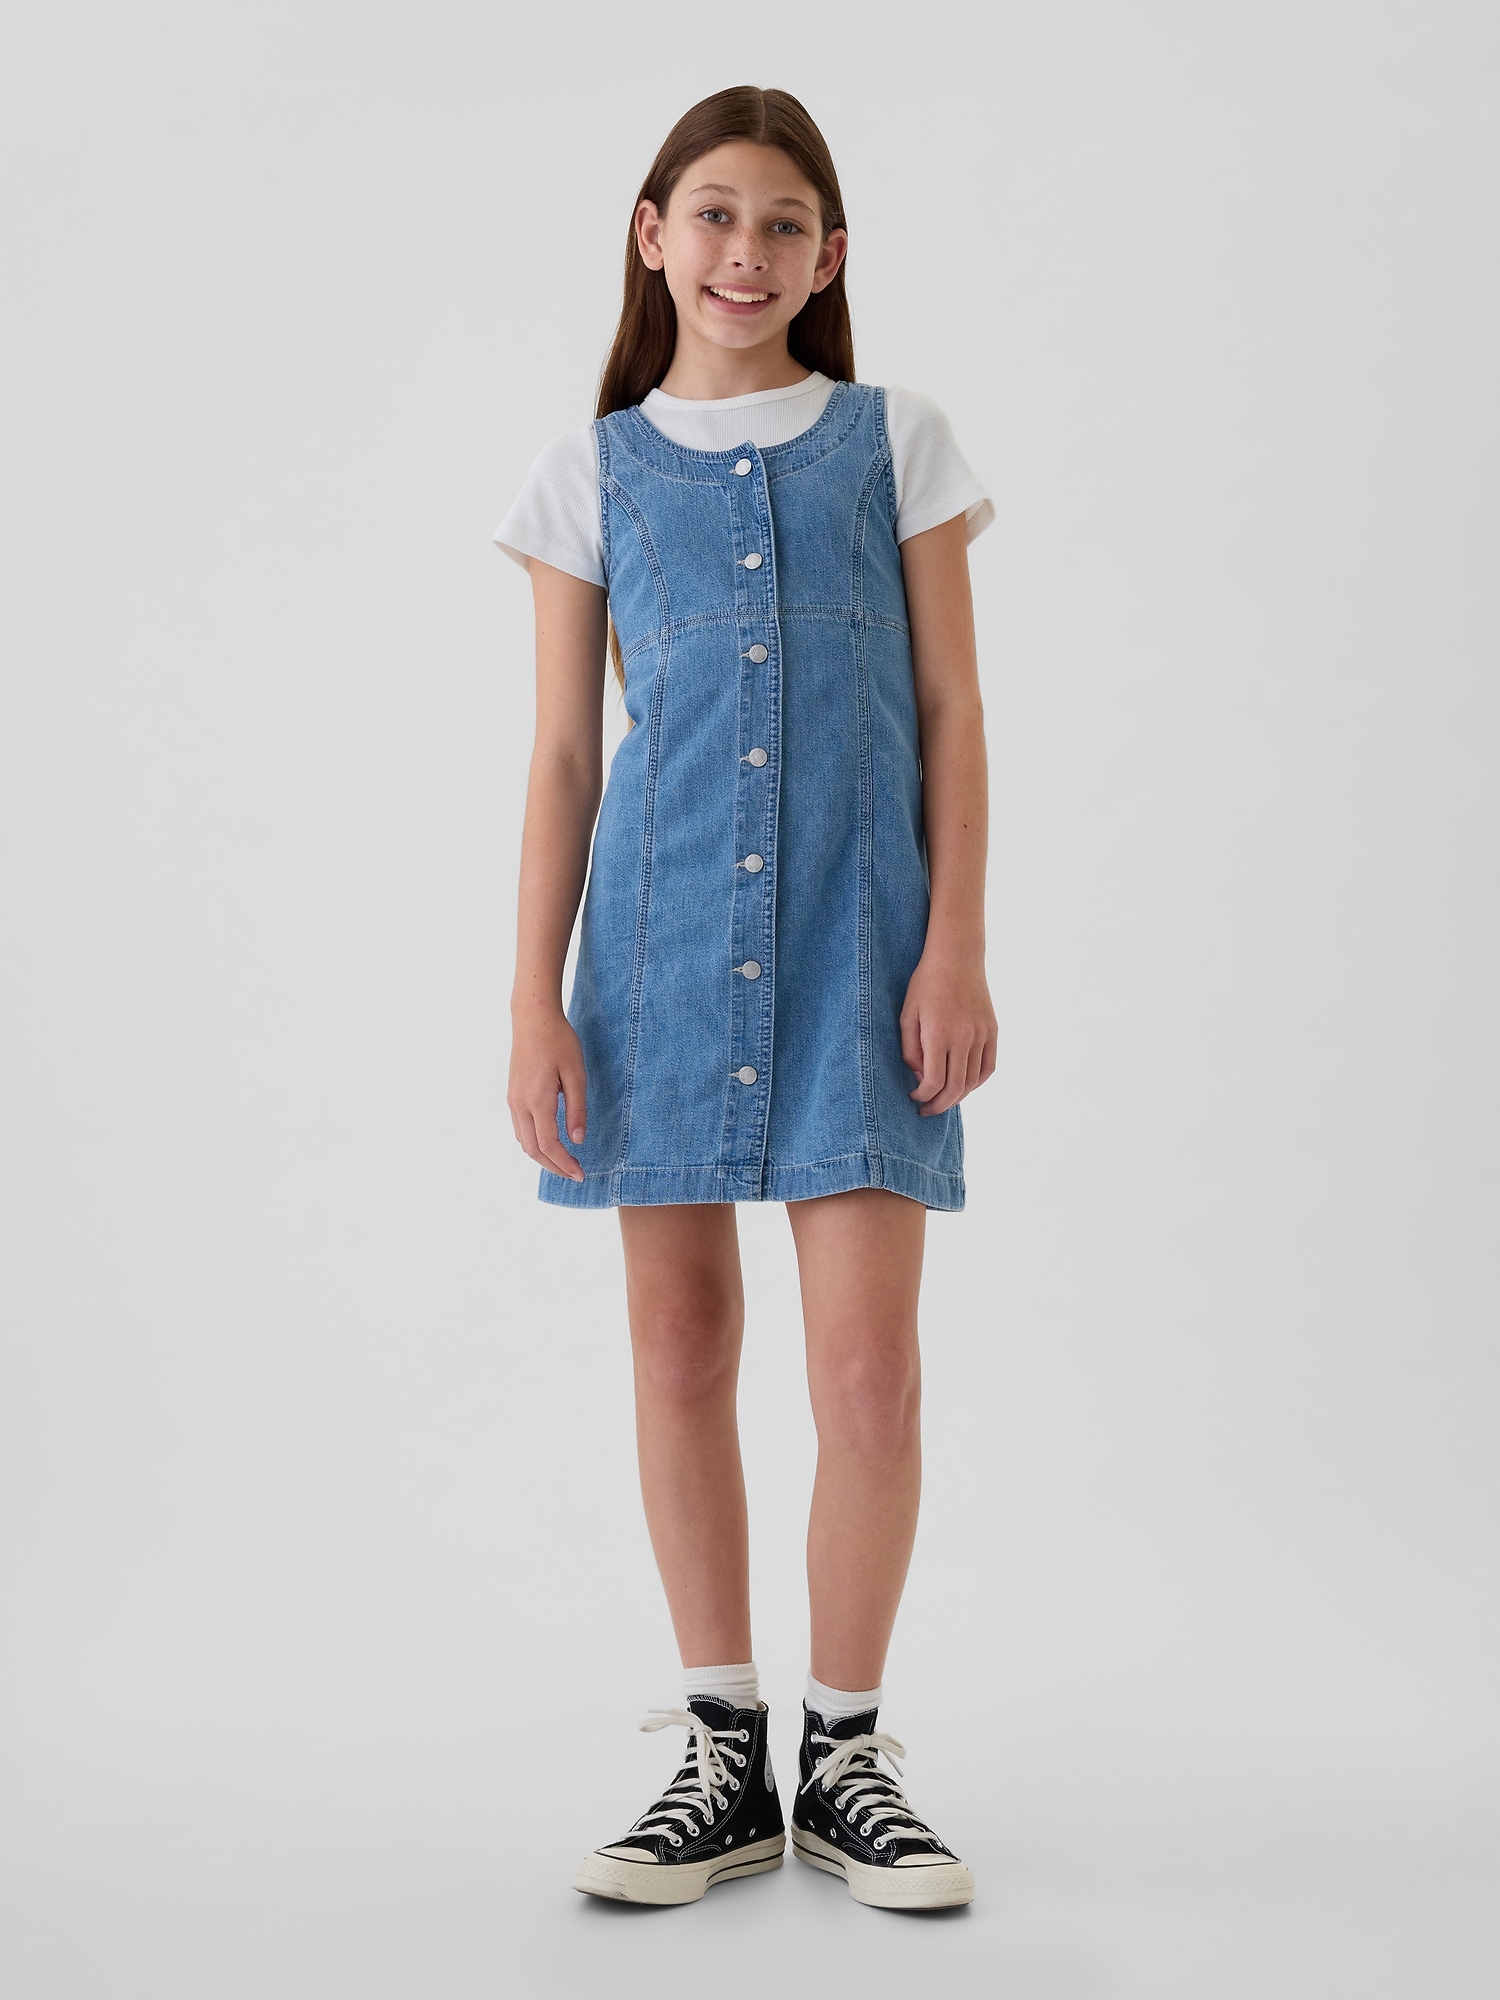 Kids Archive Button Denim Dress